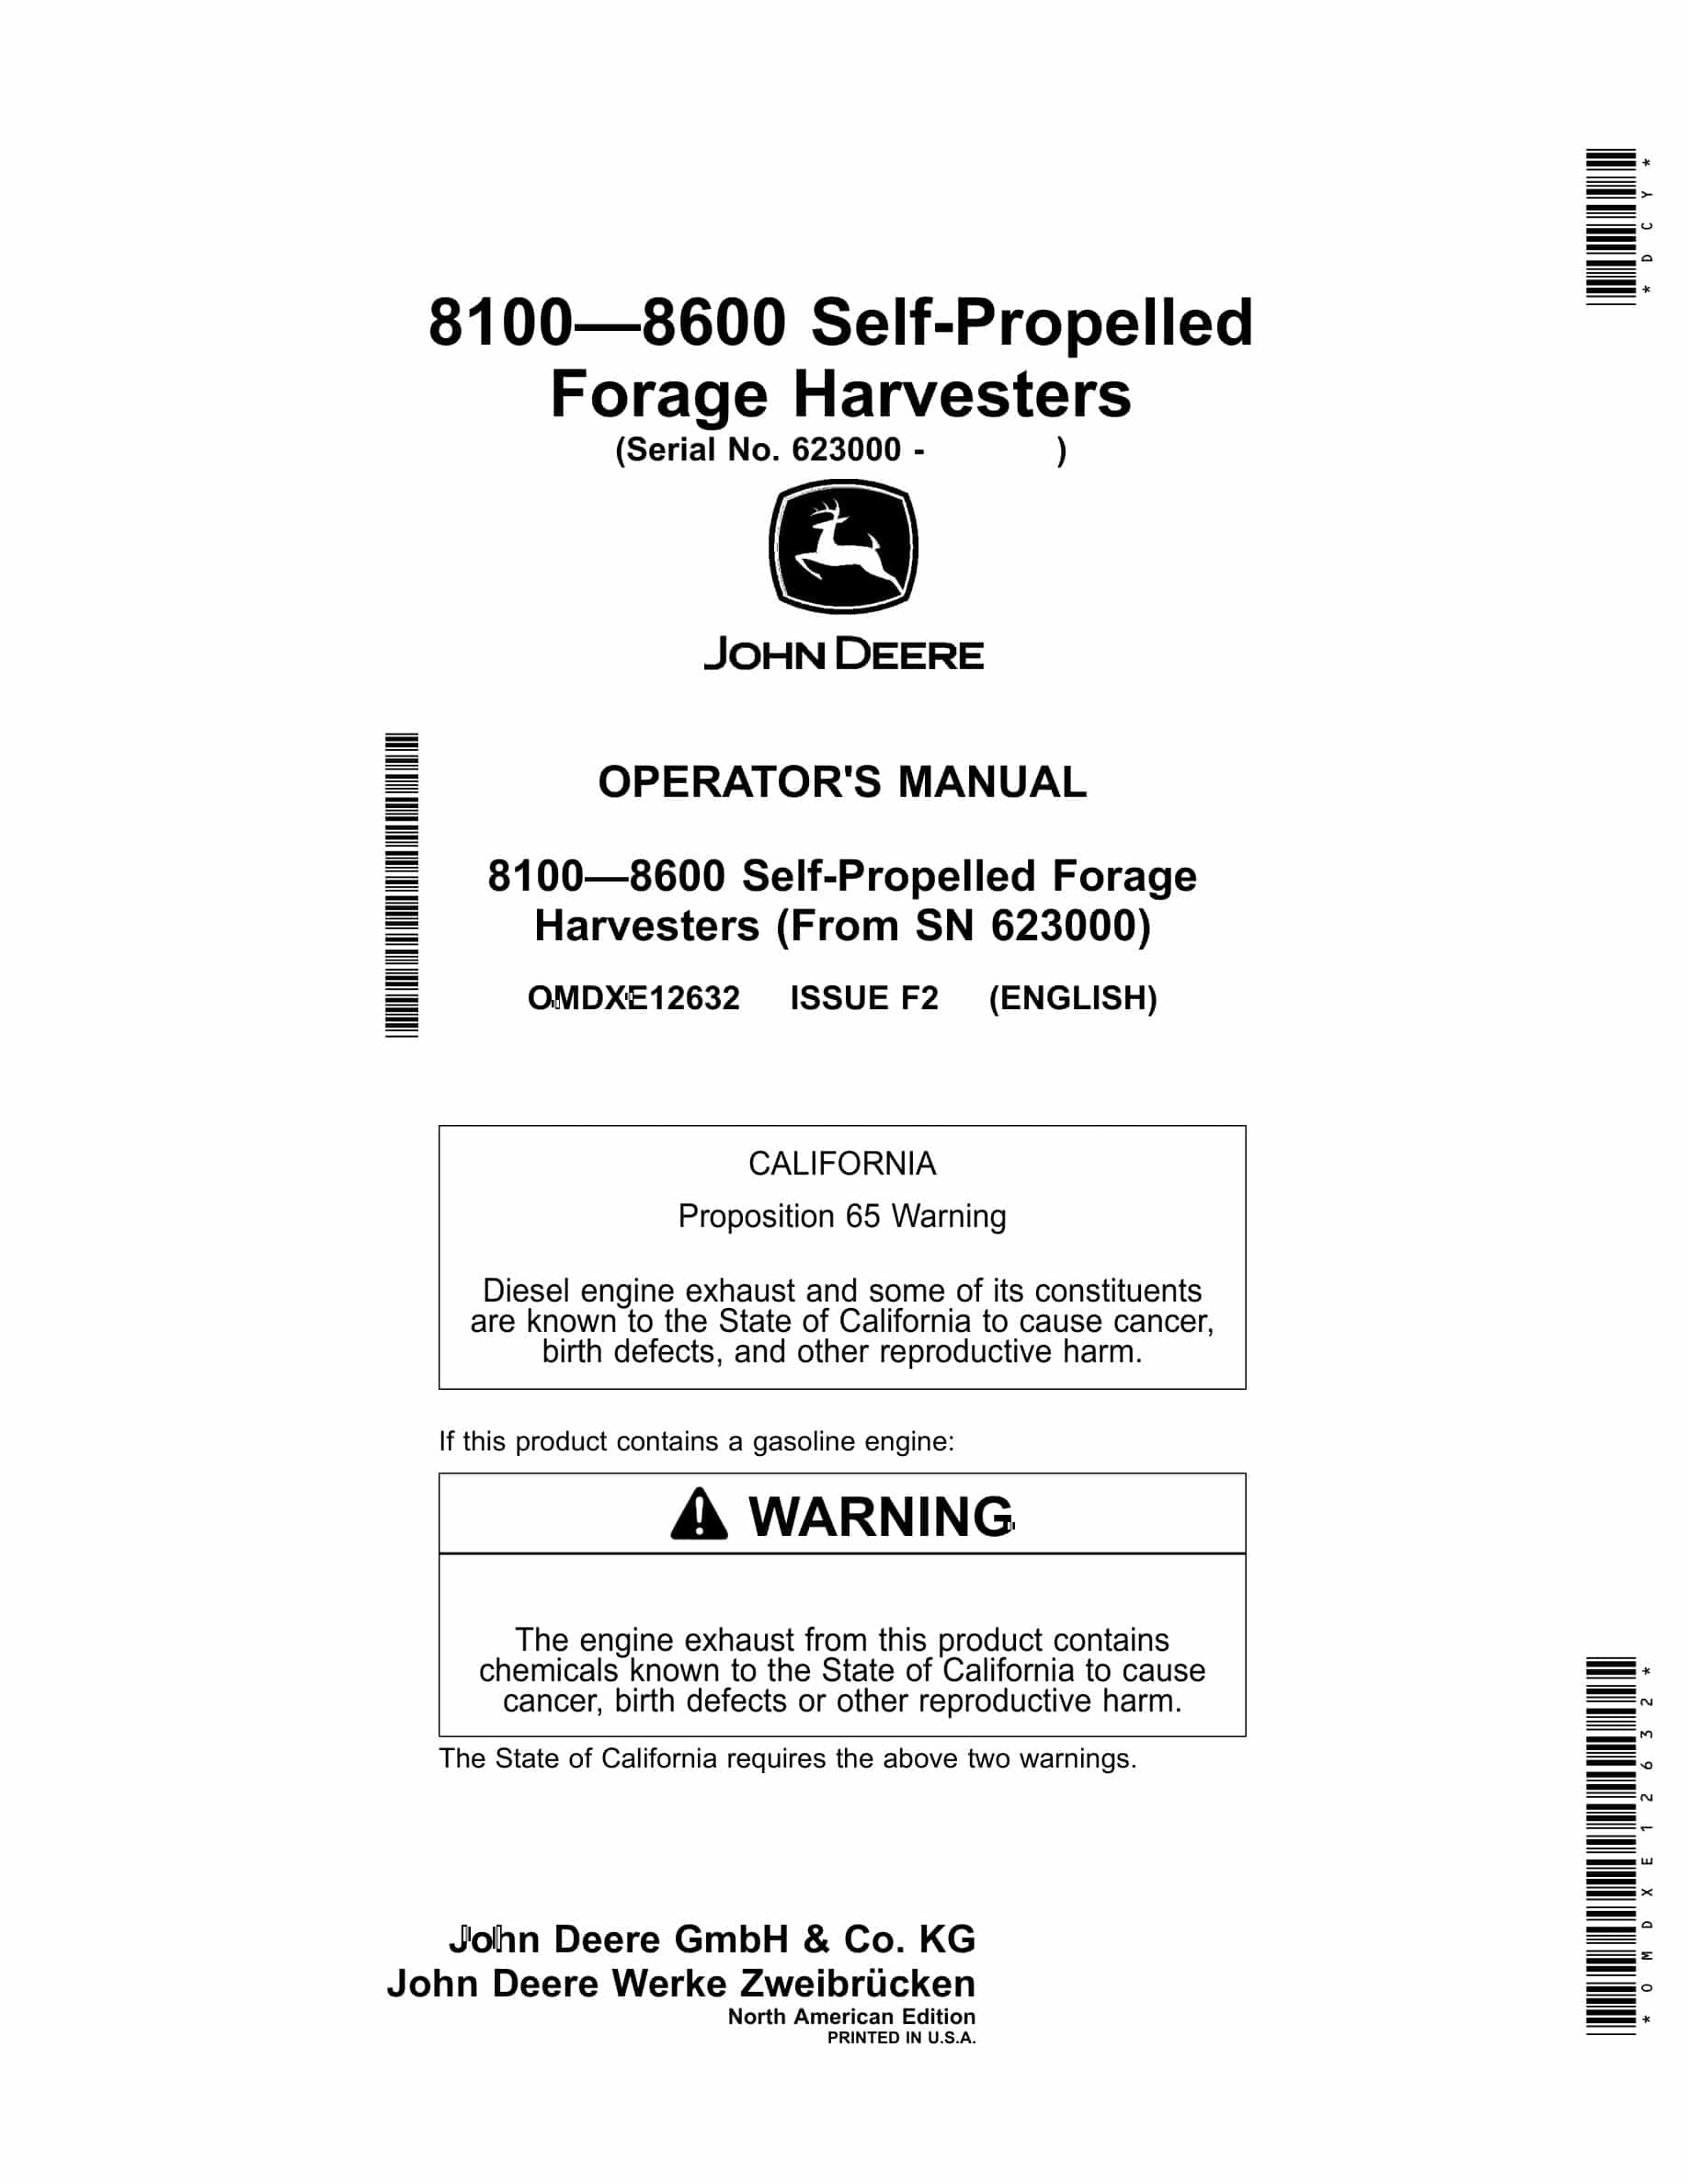 John Deere 8100 – 8600 Self-Propelled Forage Harvester Operator Manual OMDXE12632-1